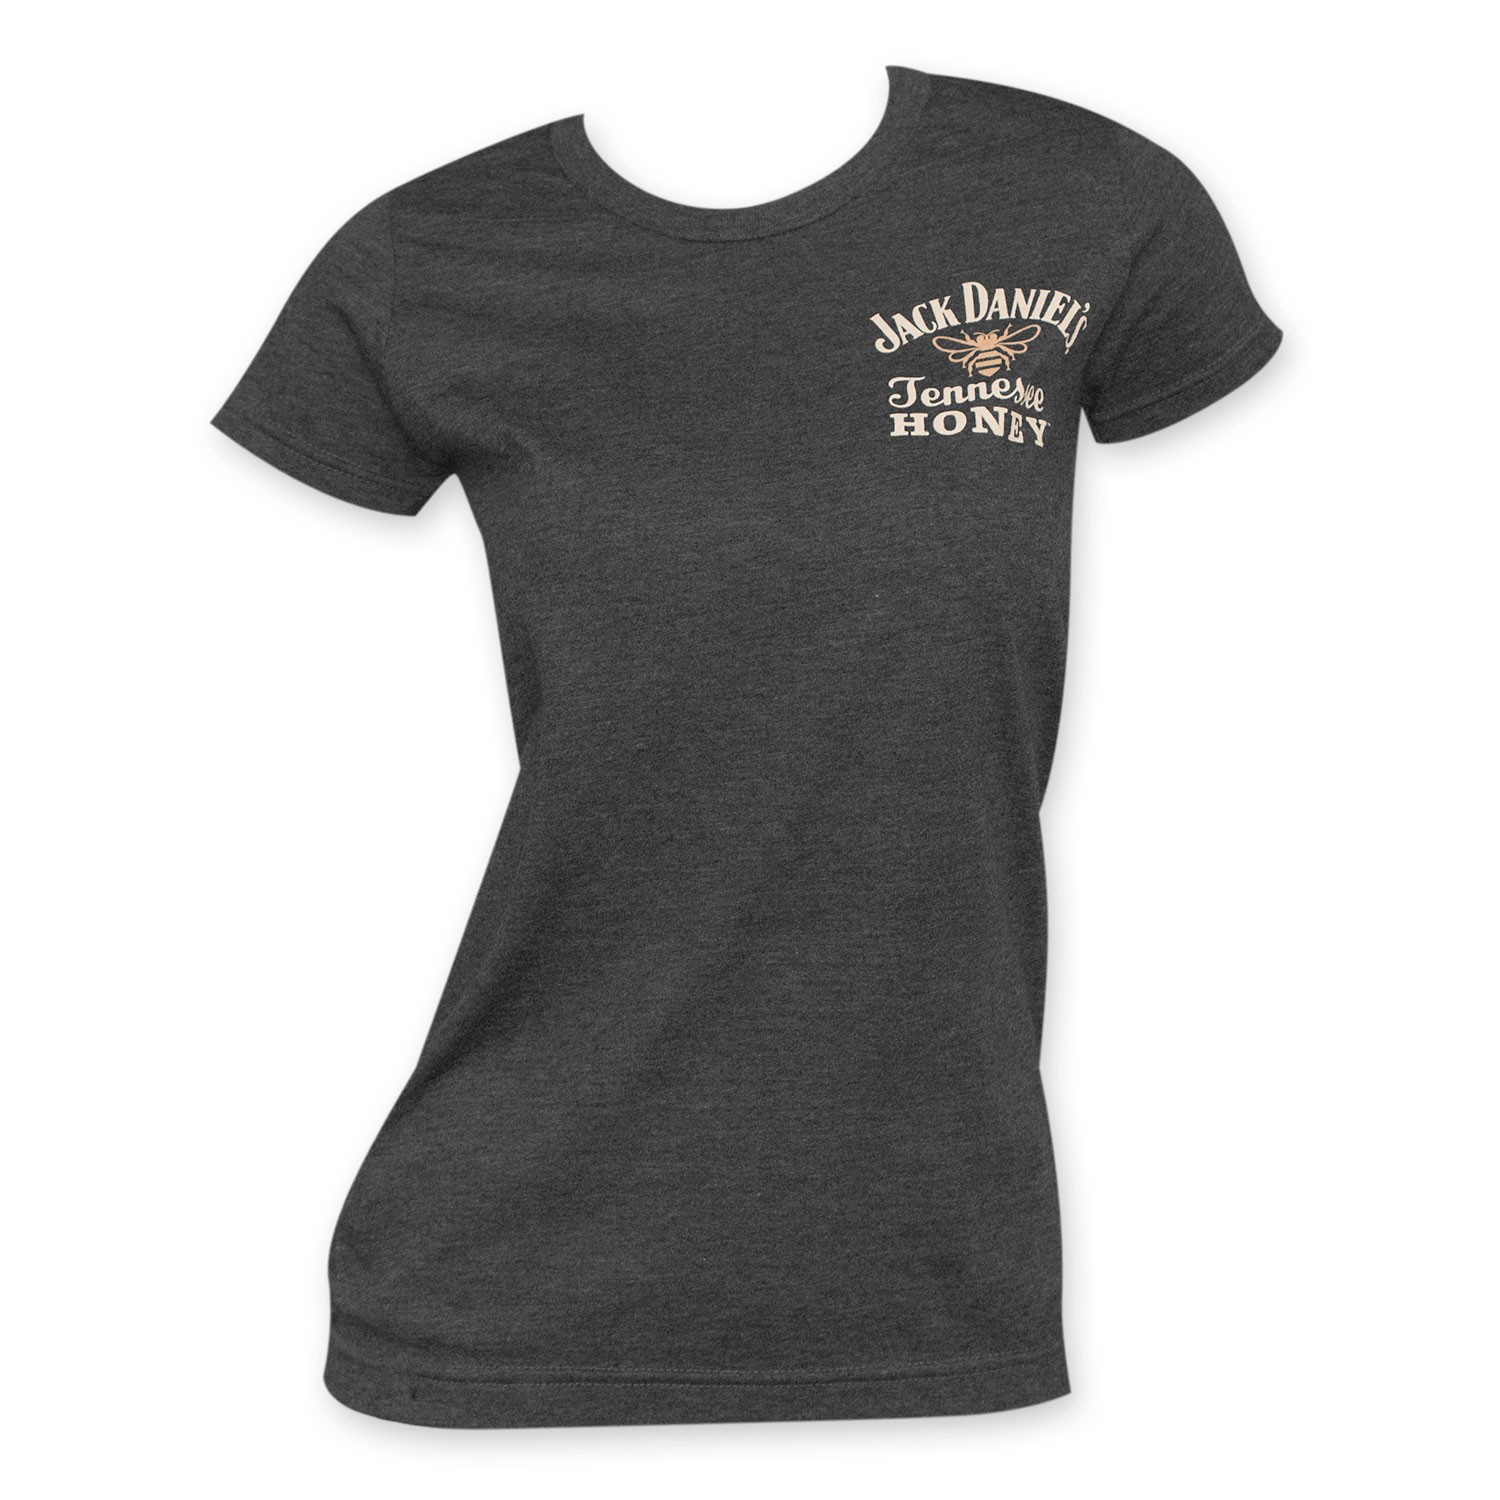 Jack Daniels Women's Black Tennessee Honey Tee Shirt